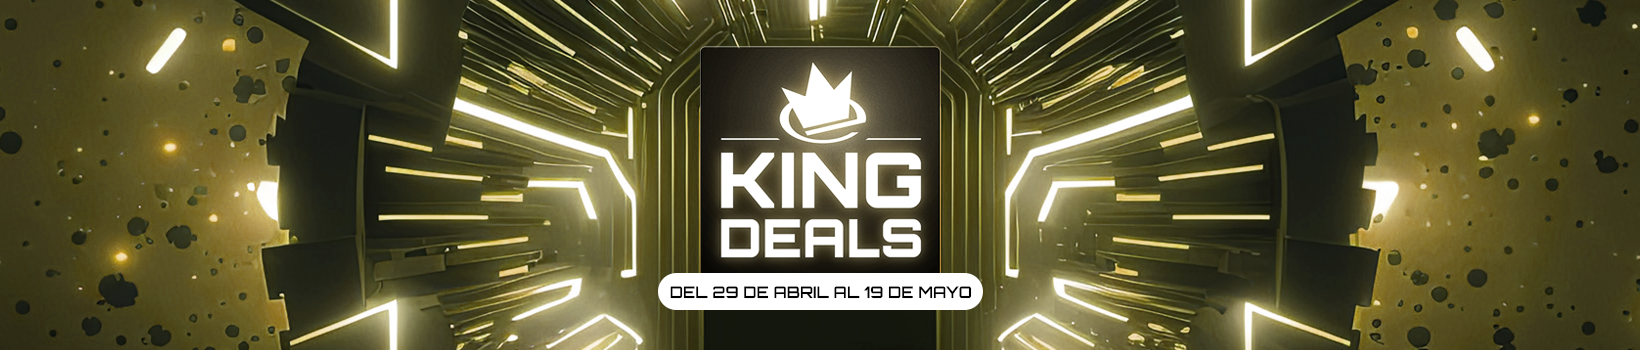 Campaña King Deals